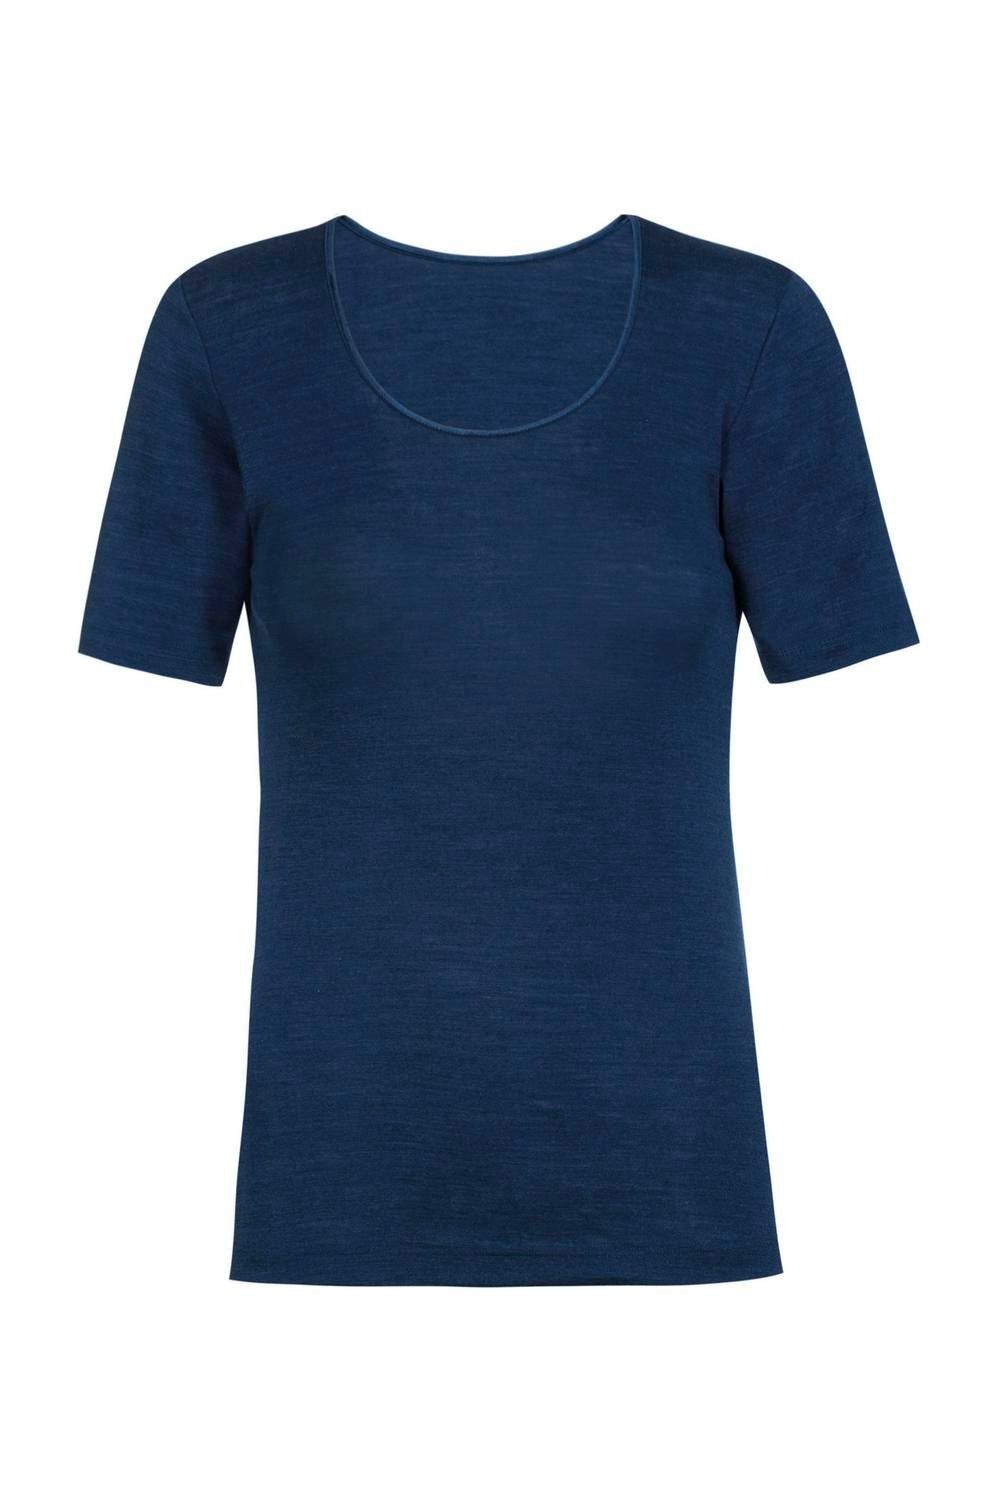 Mey T-Shirt Ärmel blue ink 1/2 Spencer